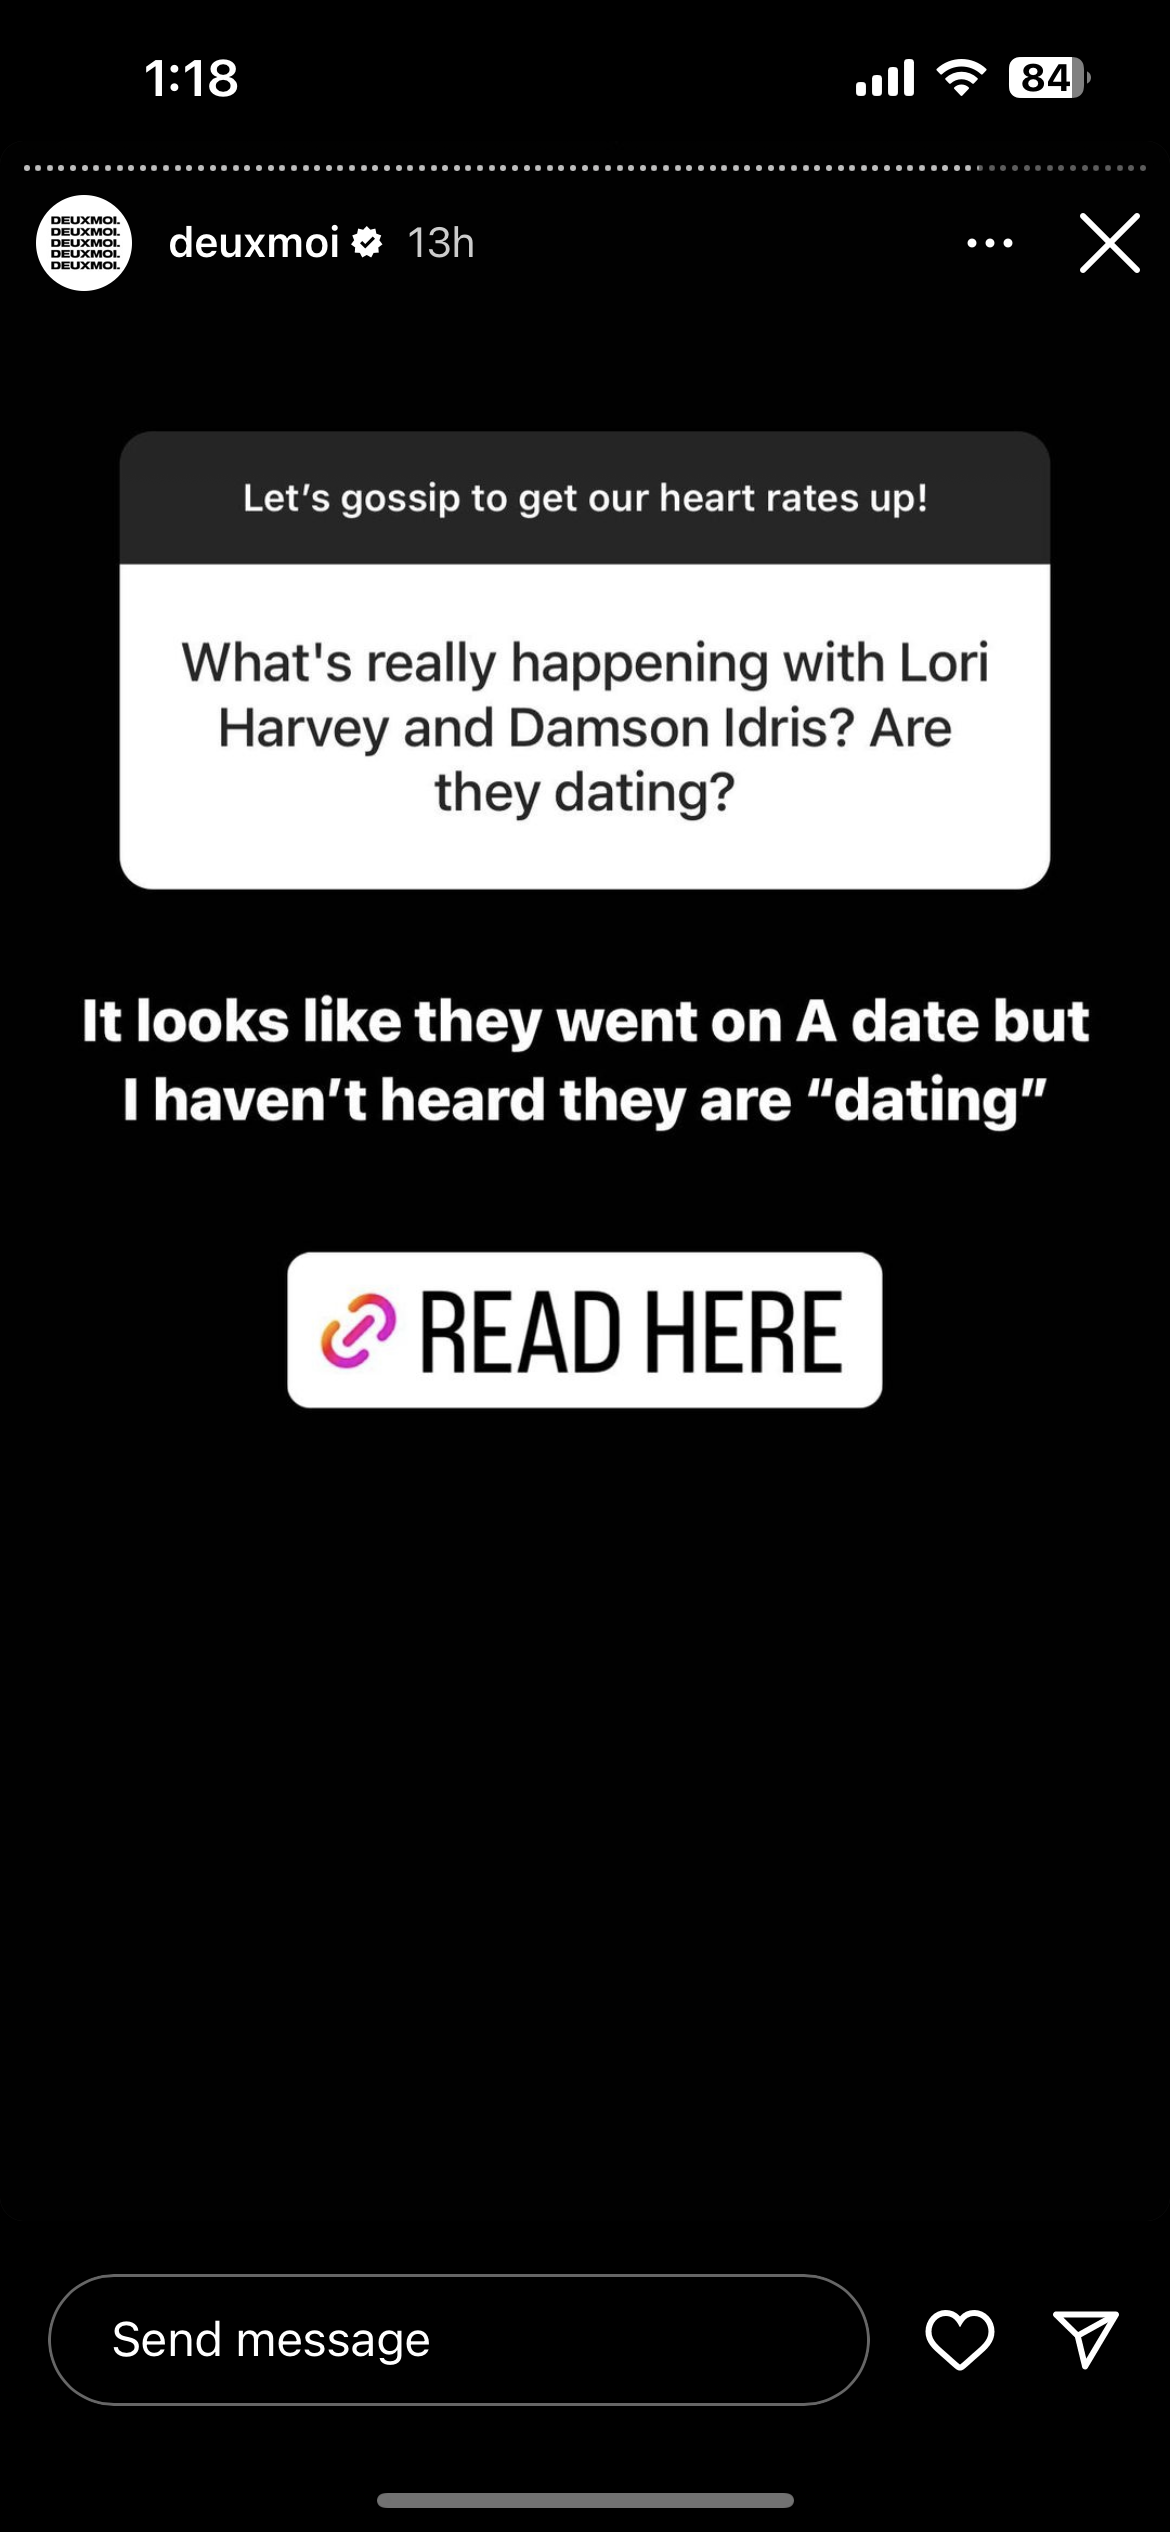 Deuxmoi's response on Lori Harvey and Damson Idris' rumored dating. 